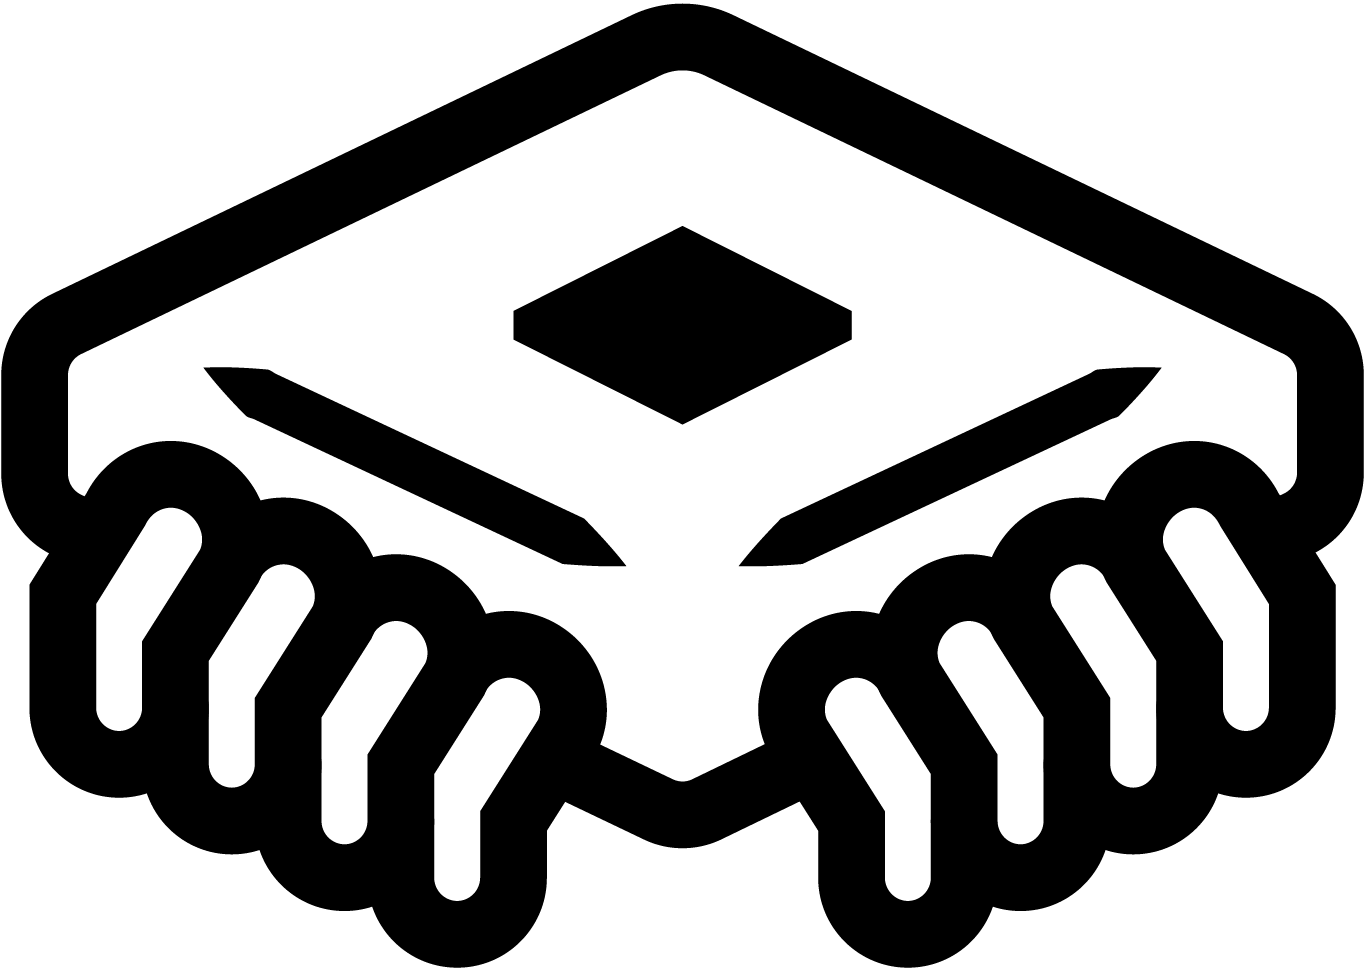 polymorphism-logo